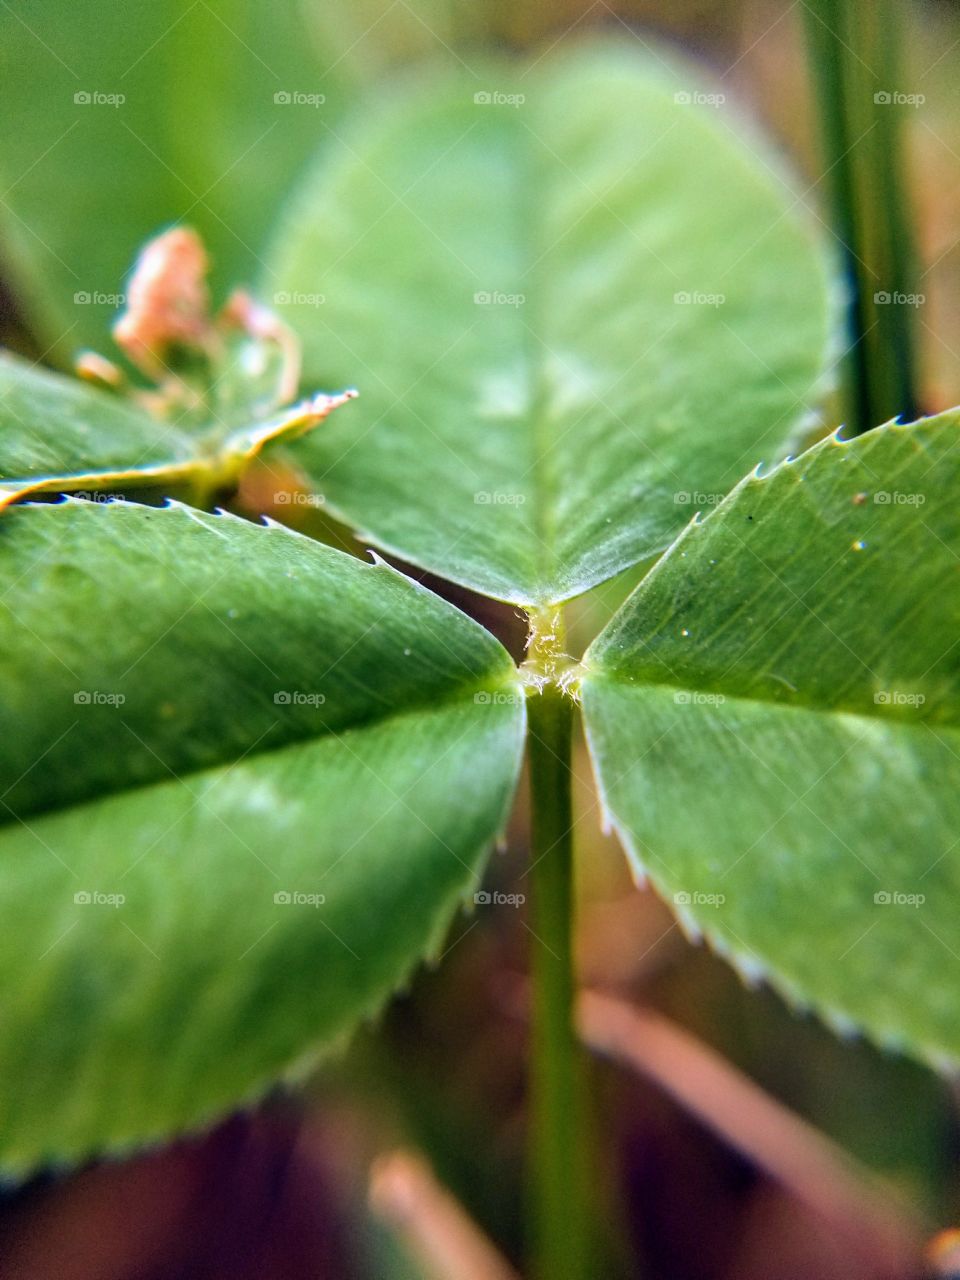 macro leaf 5 (clover)